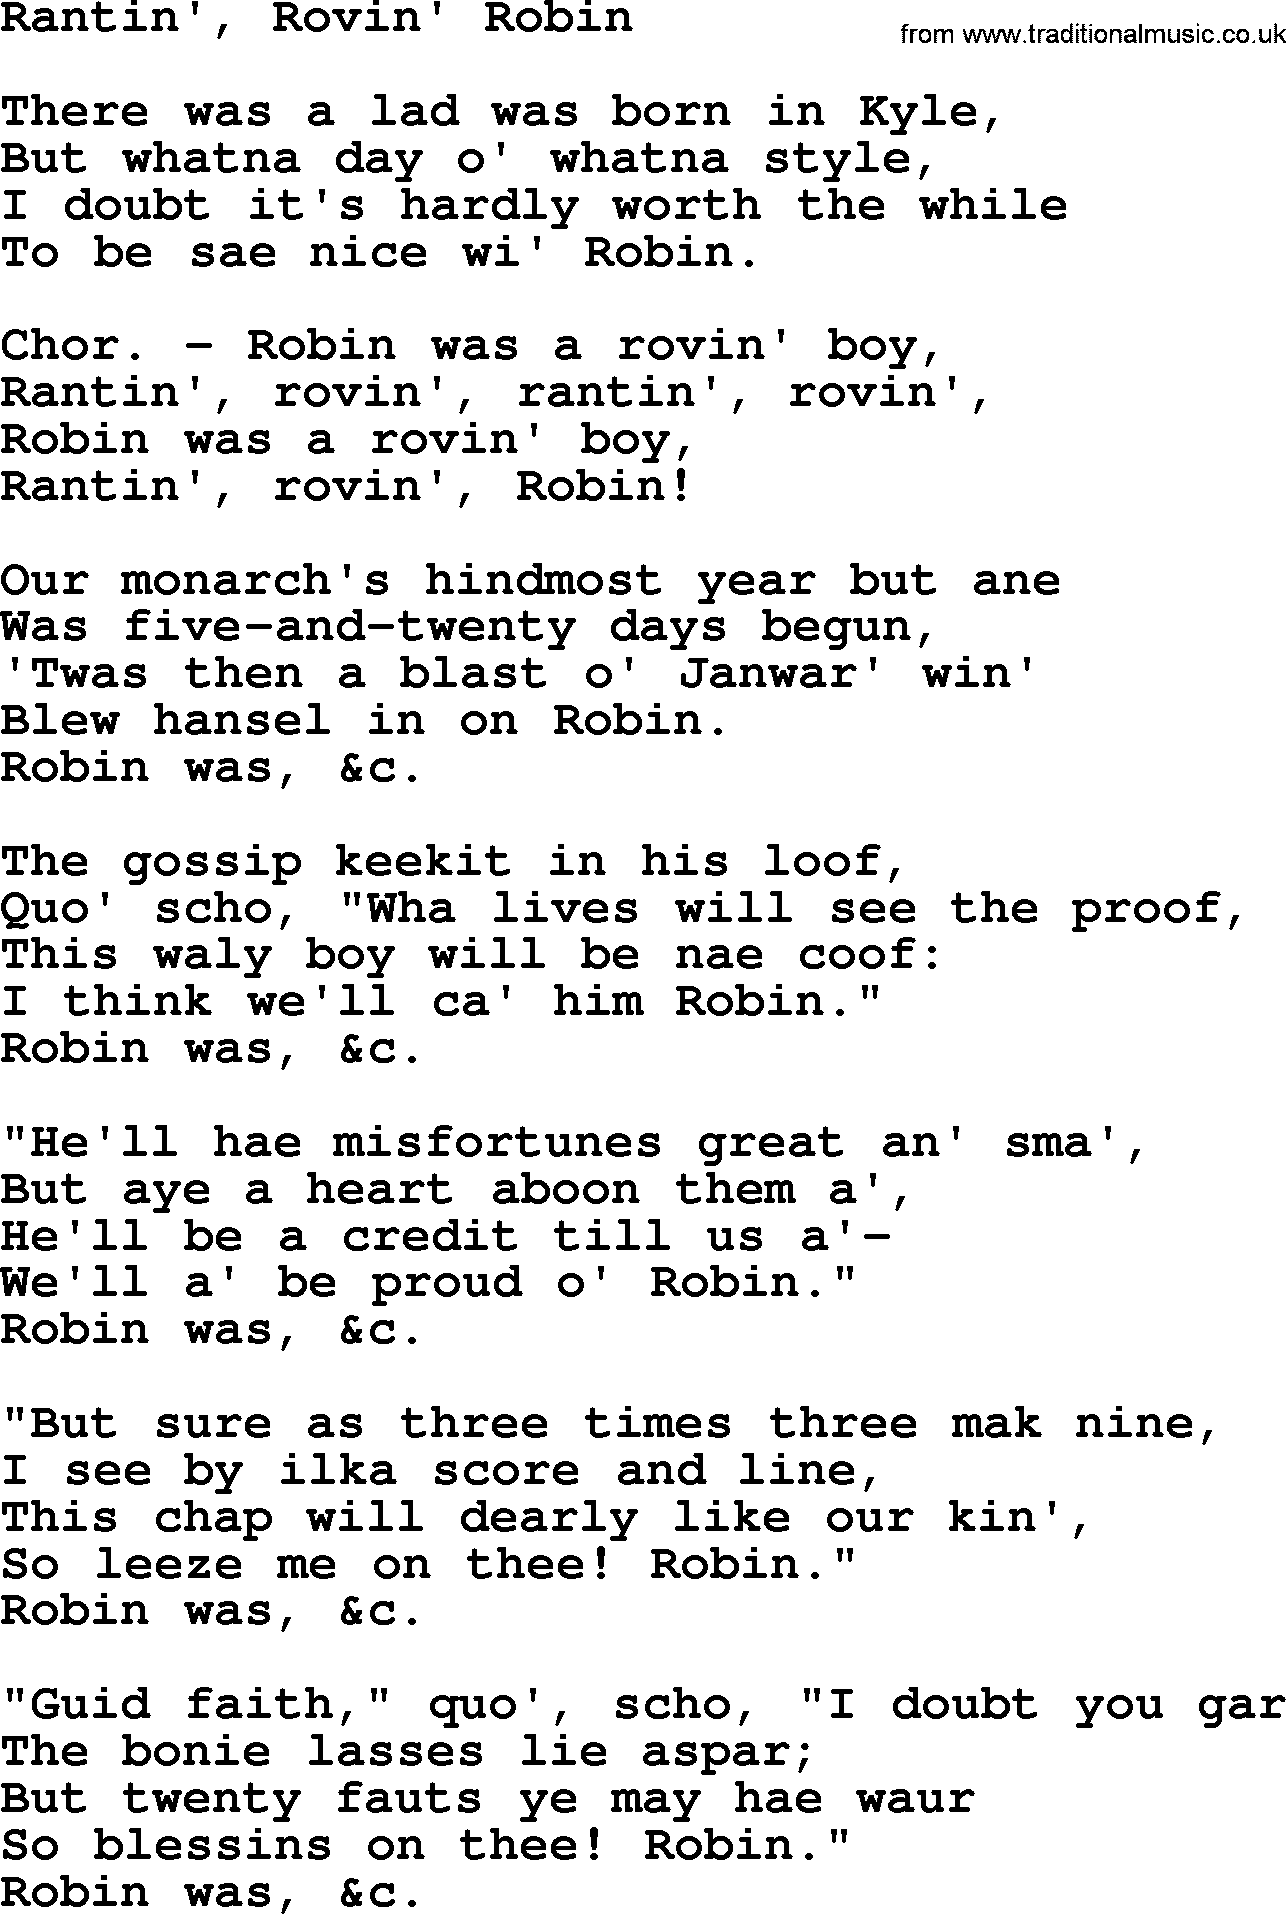 Robert Burns Songs & Lyrics: Rantin', Rovin' Robin